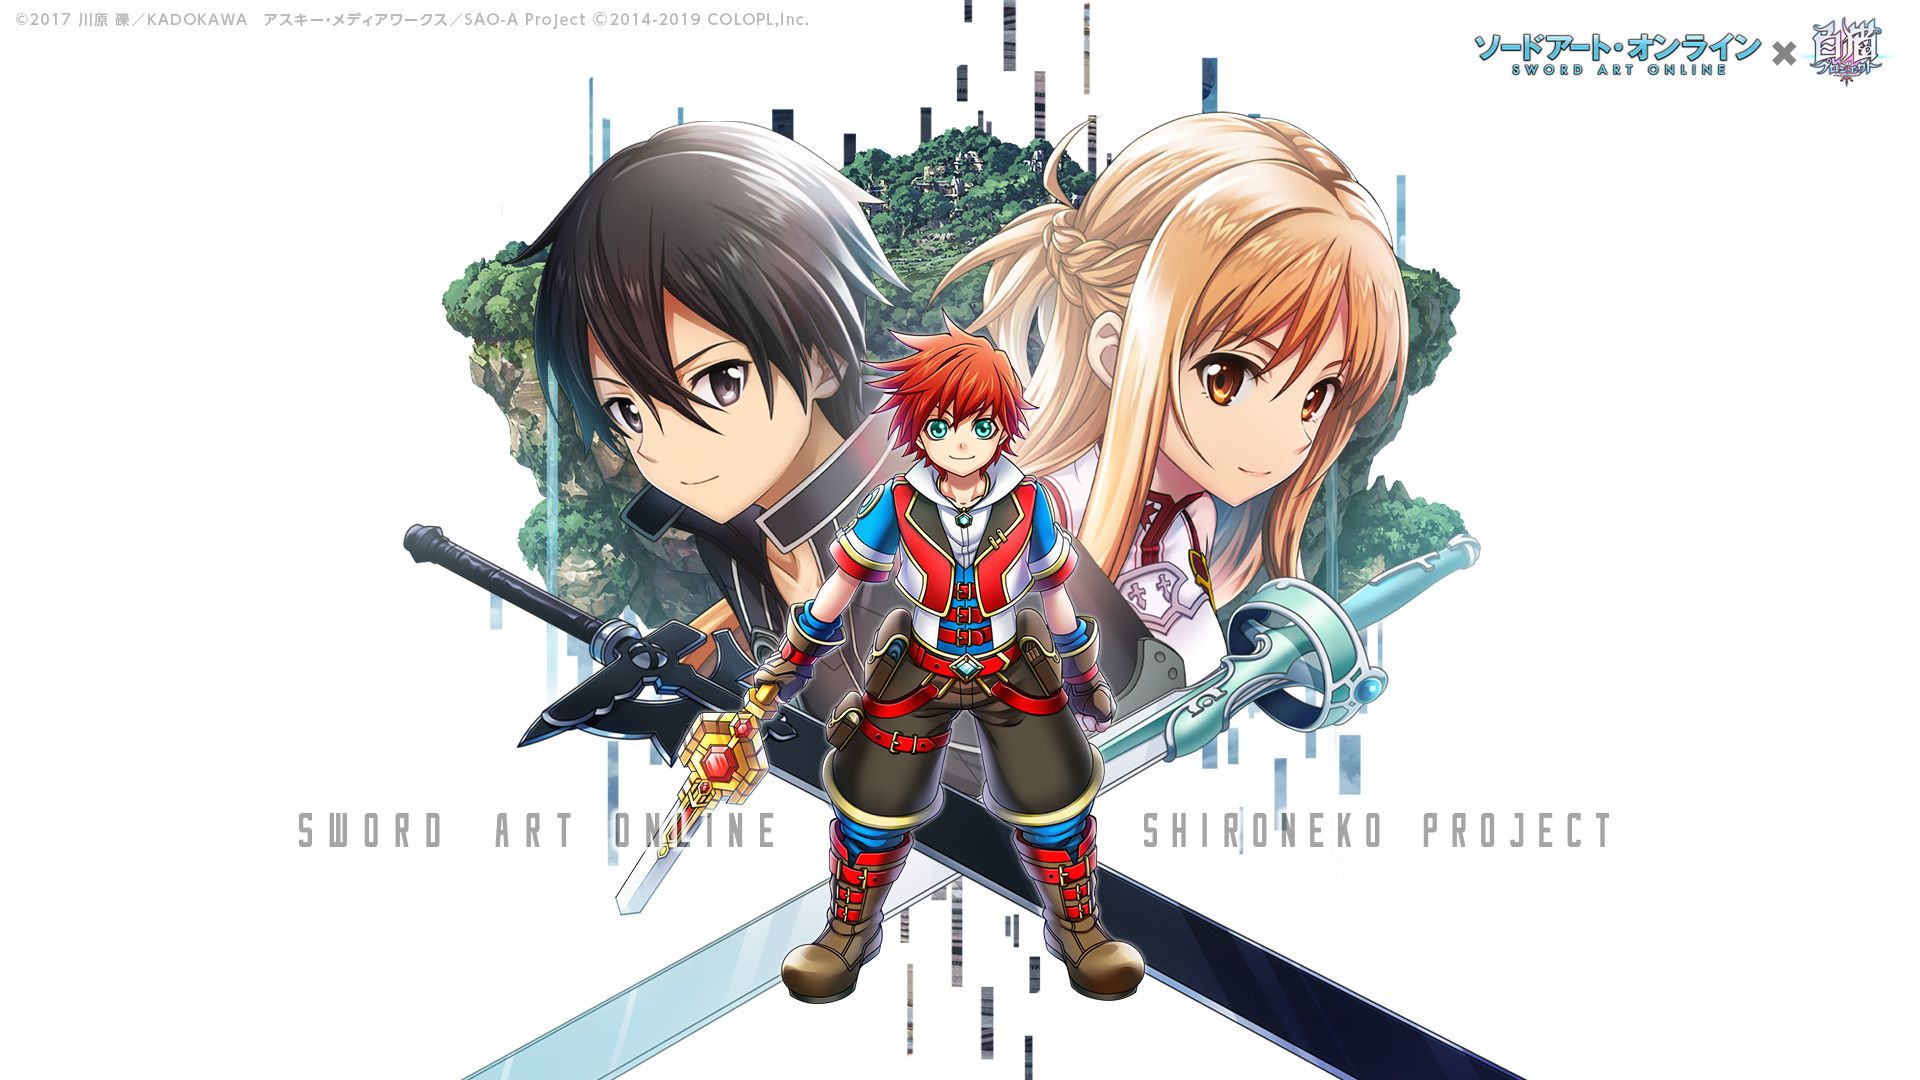 Sword Art Online Crossover Shironeko Project Wallpaper, HD Anime